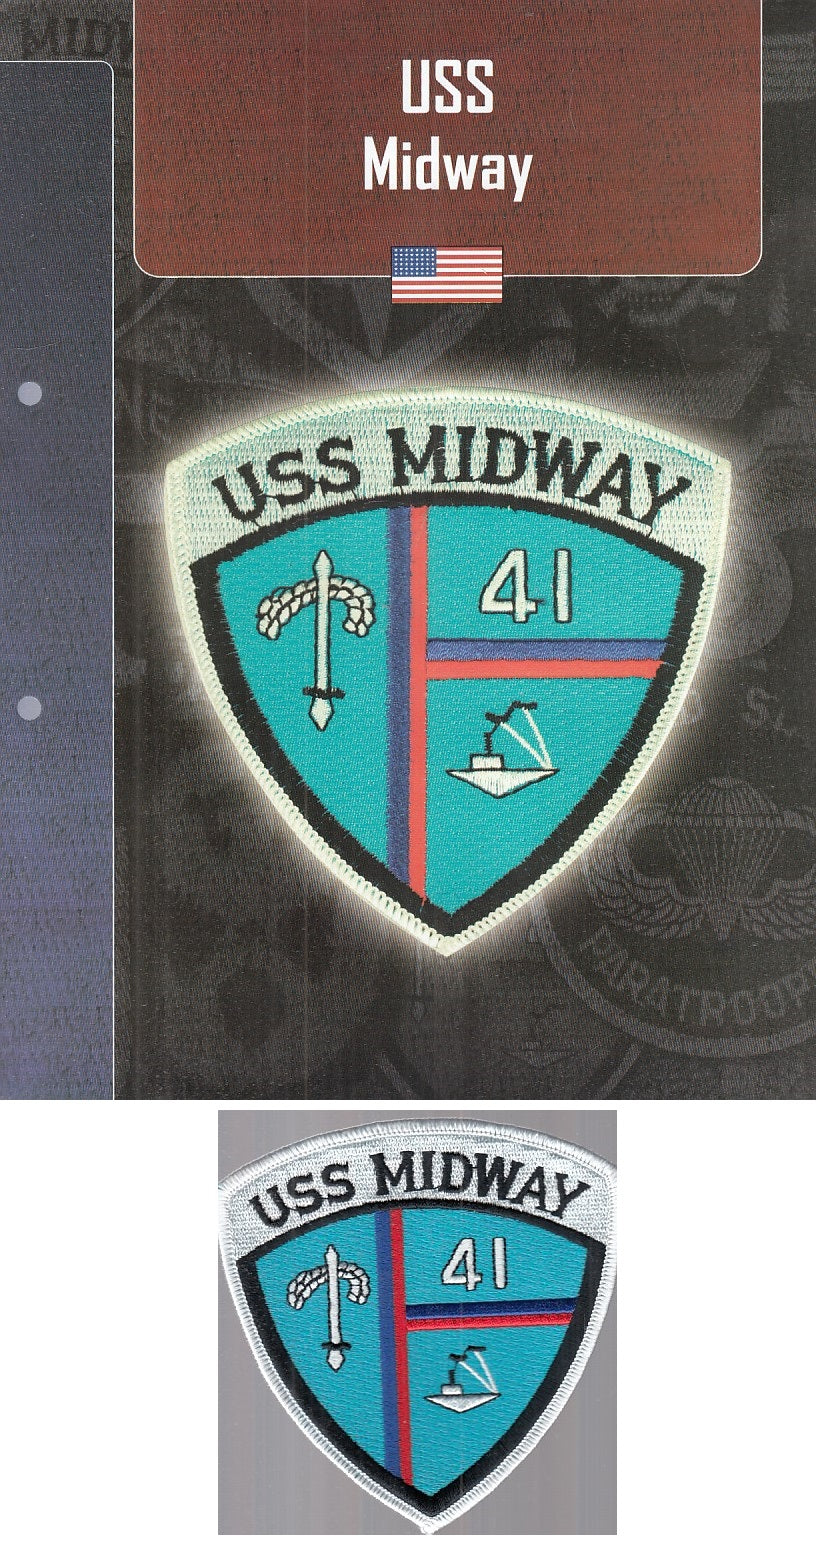 CM- DISTINTIVI MILITARI USA - GAGLIARDETTO WW2 - USS MIDWAY